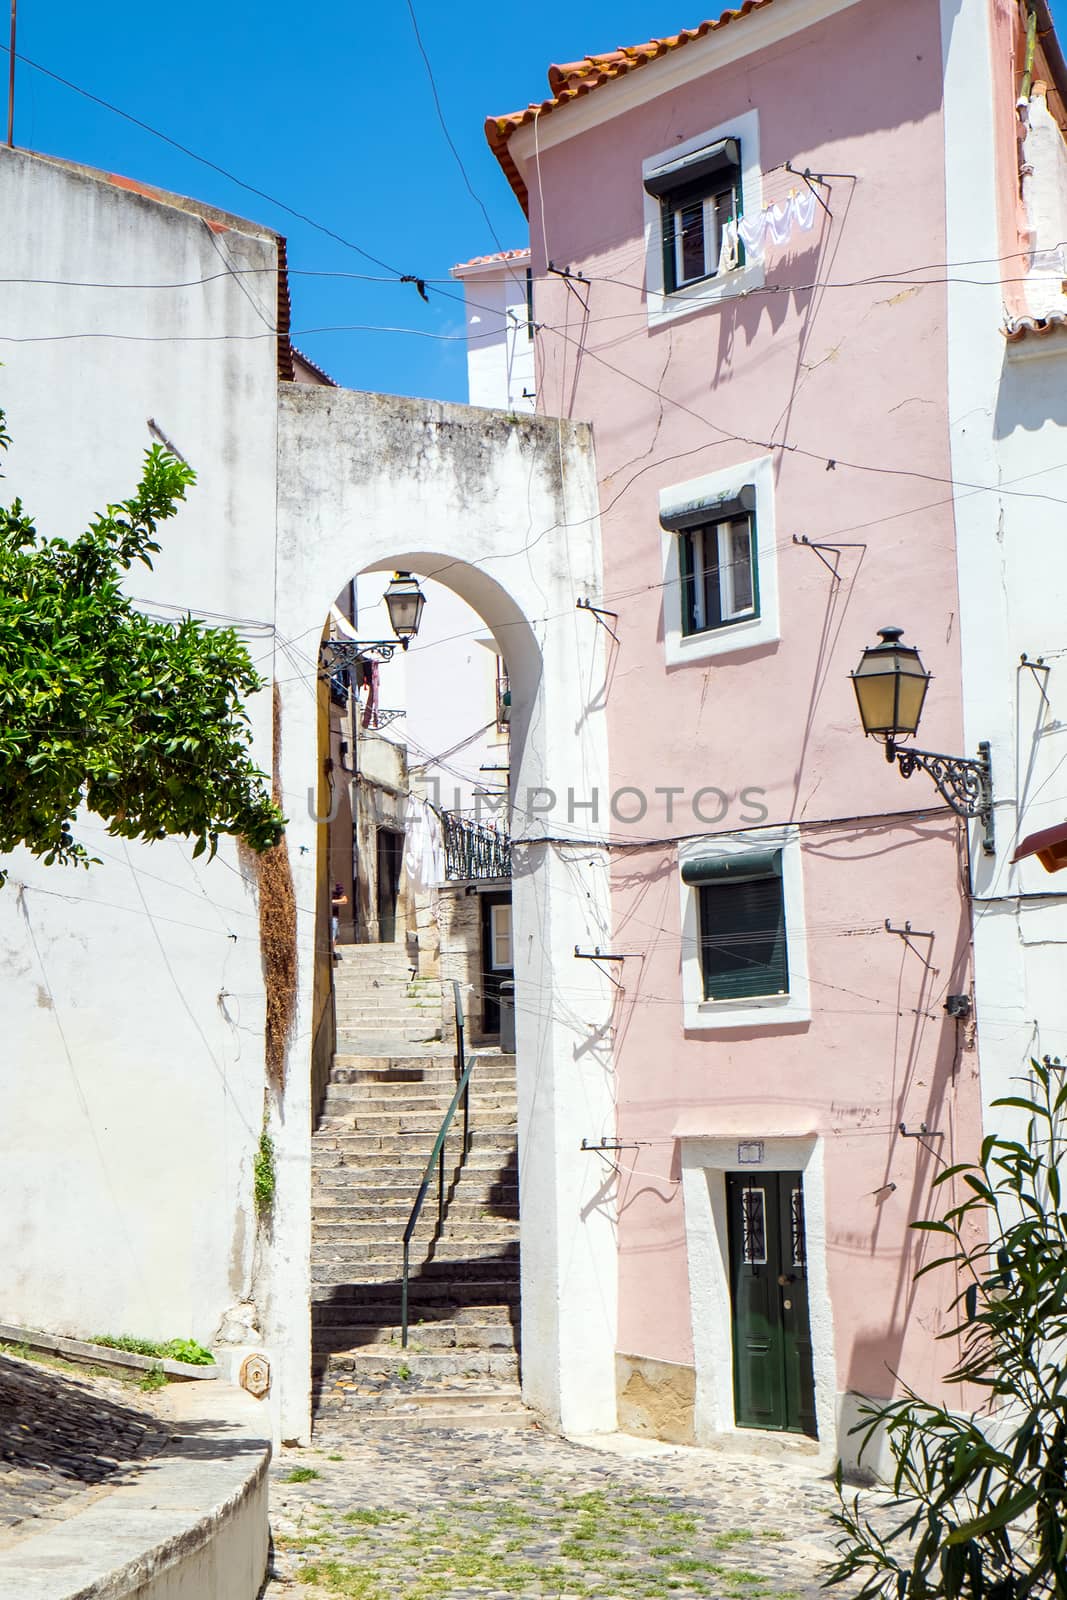 Street scene inside the old Alfama quarter in Lisbon, Portugal